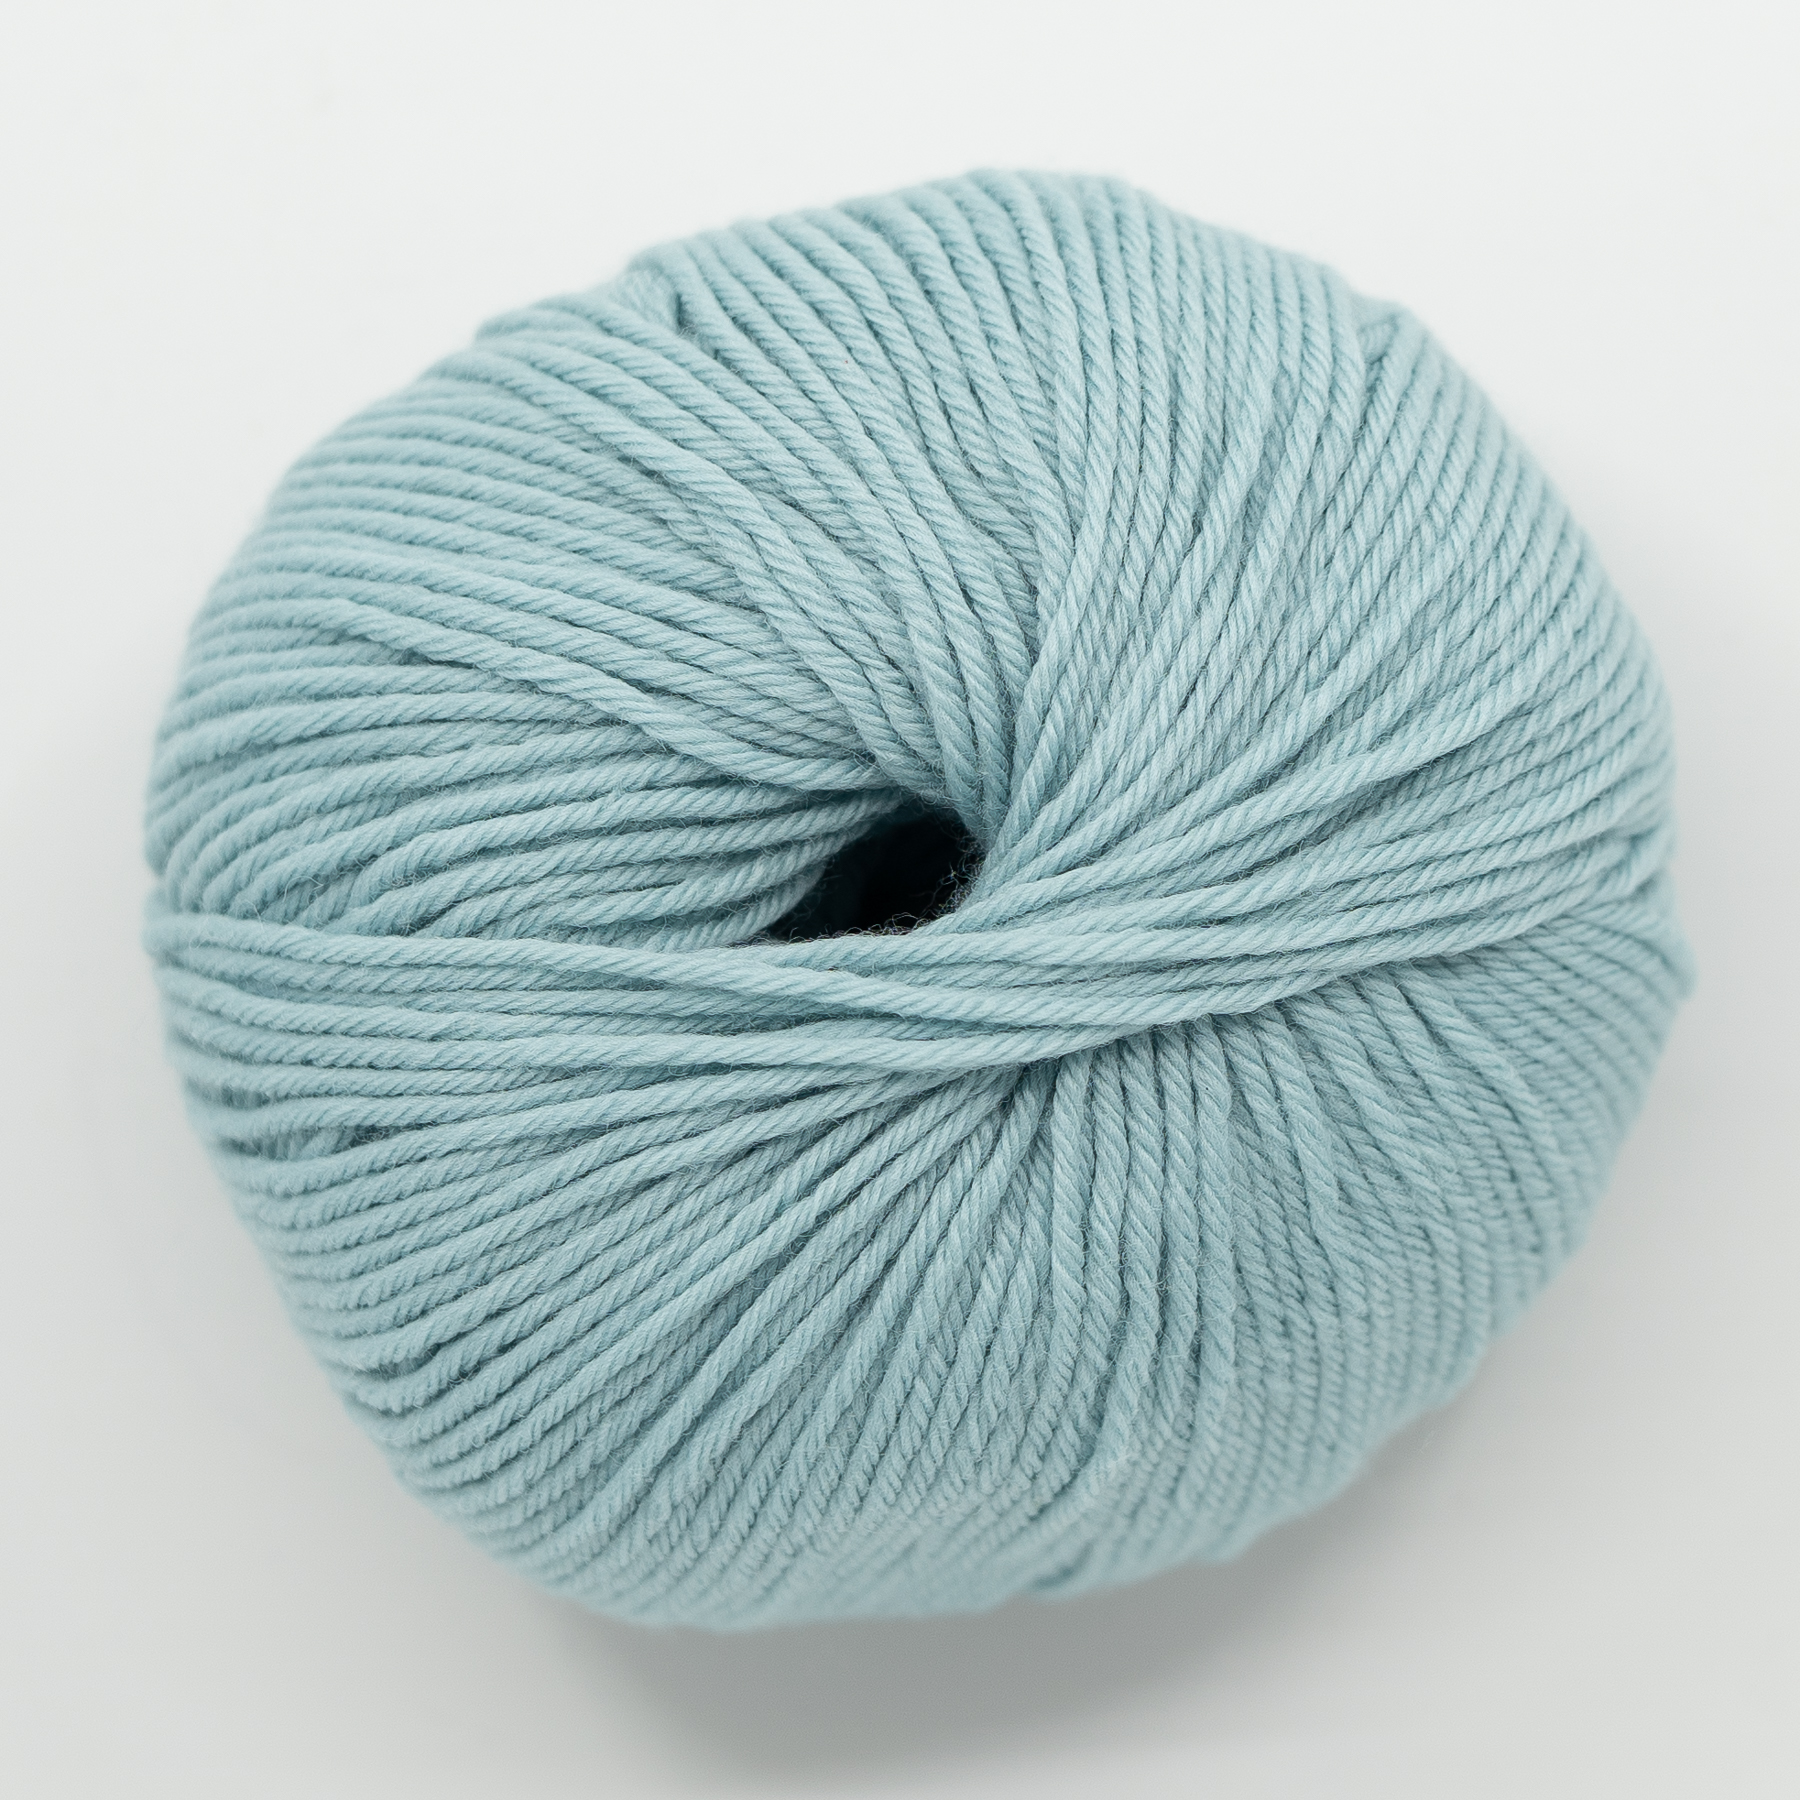  - Pale blue | Pop merino | Light blue yarn - by HipKnitShop - 26/04/2021